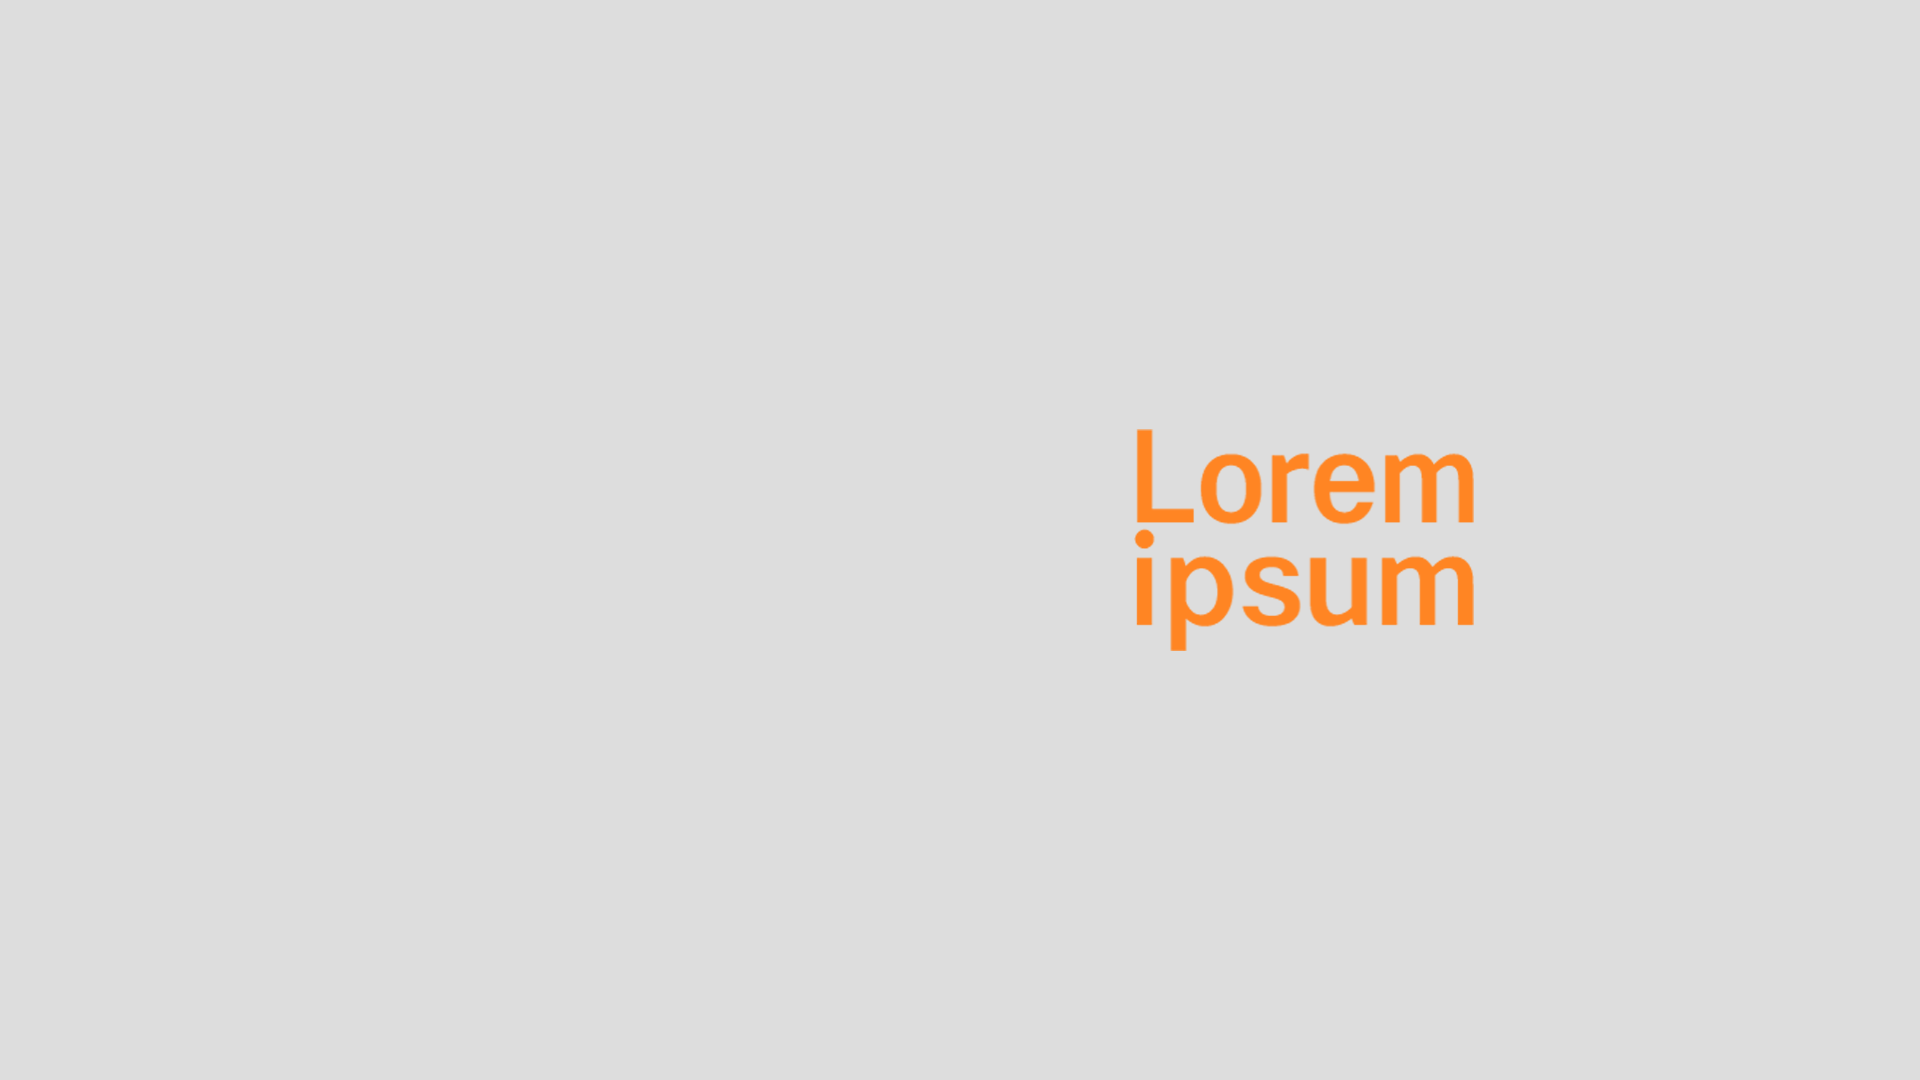 General 1920x1080 Lorem ipsum minimalism typography simple background digital art gray orange